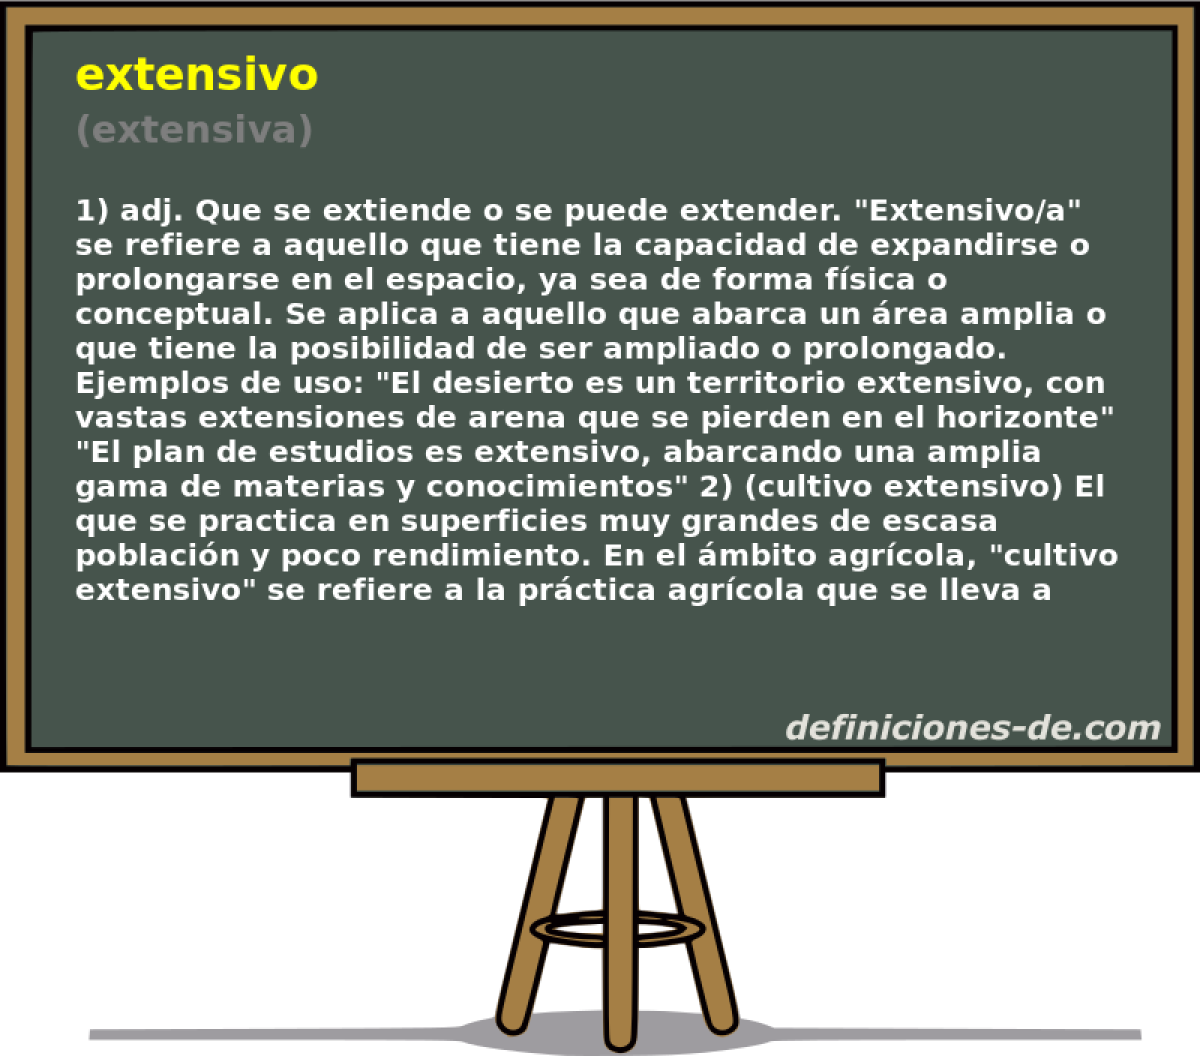 extensivo (extensiva)